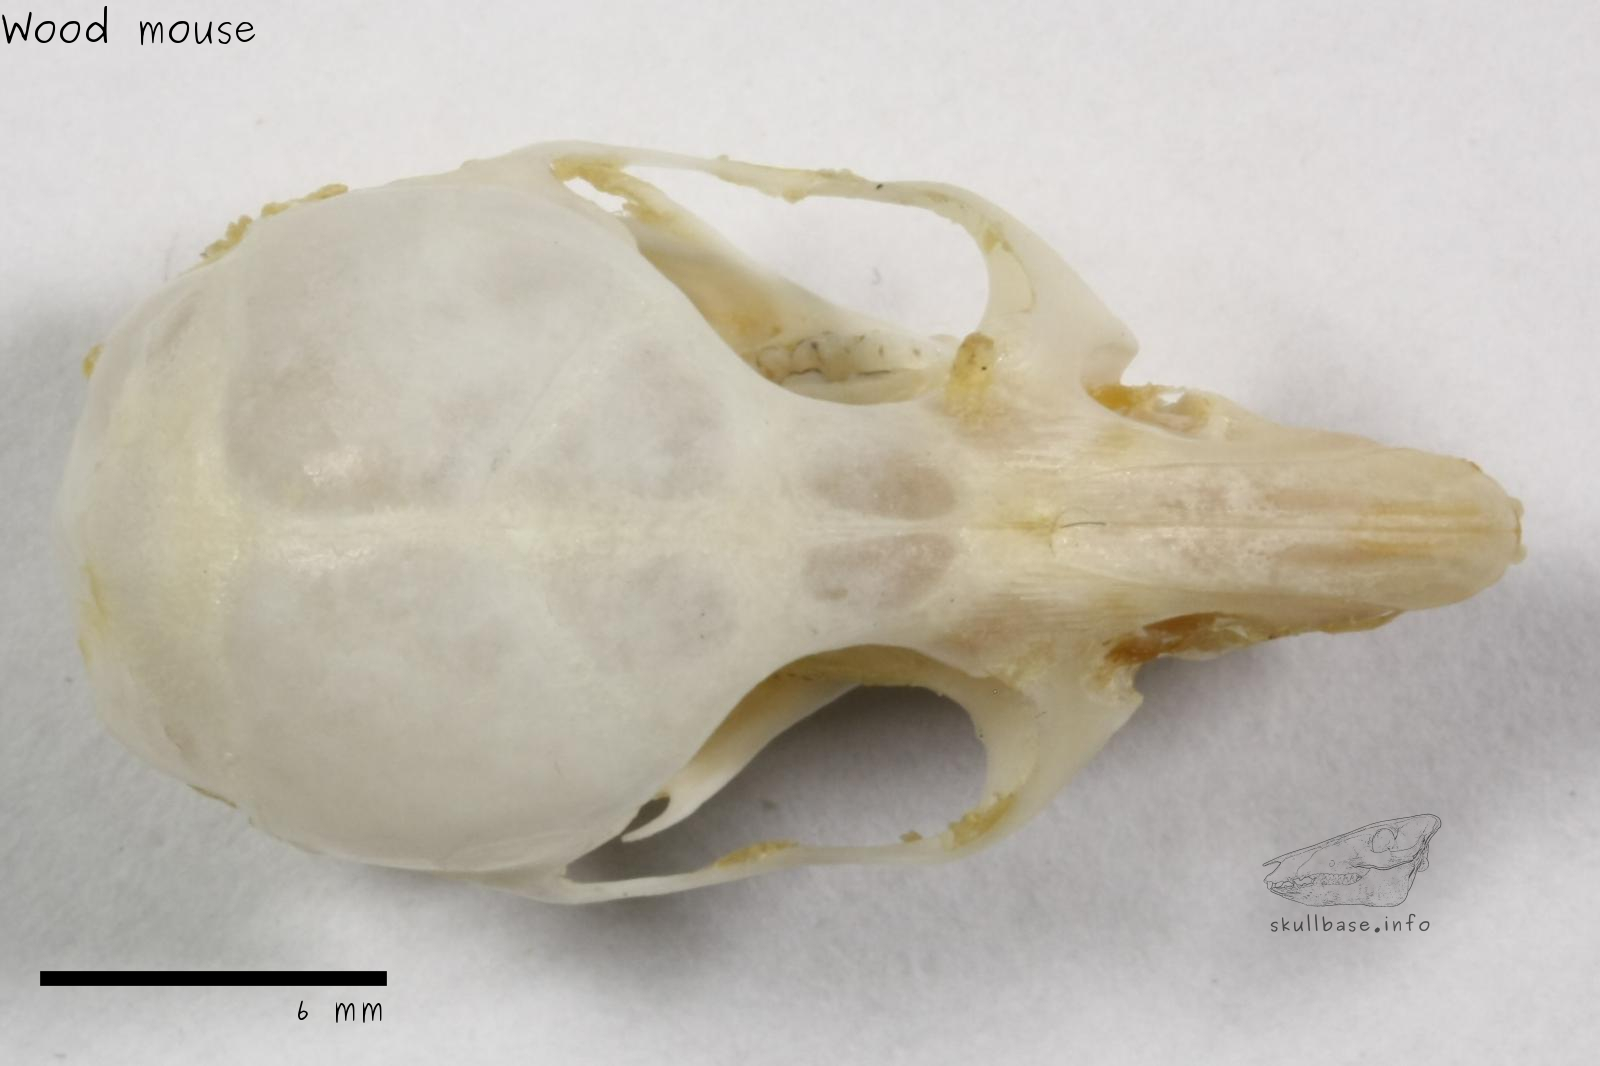 Wood mouse (Apodemus sylvaticus) skull dorsal view